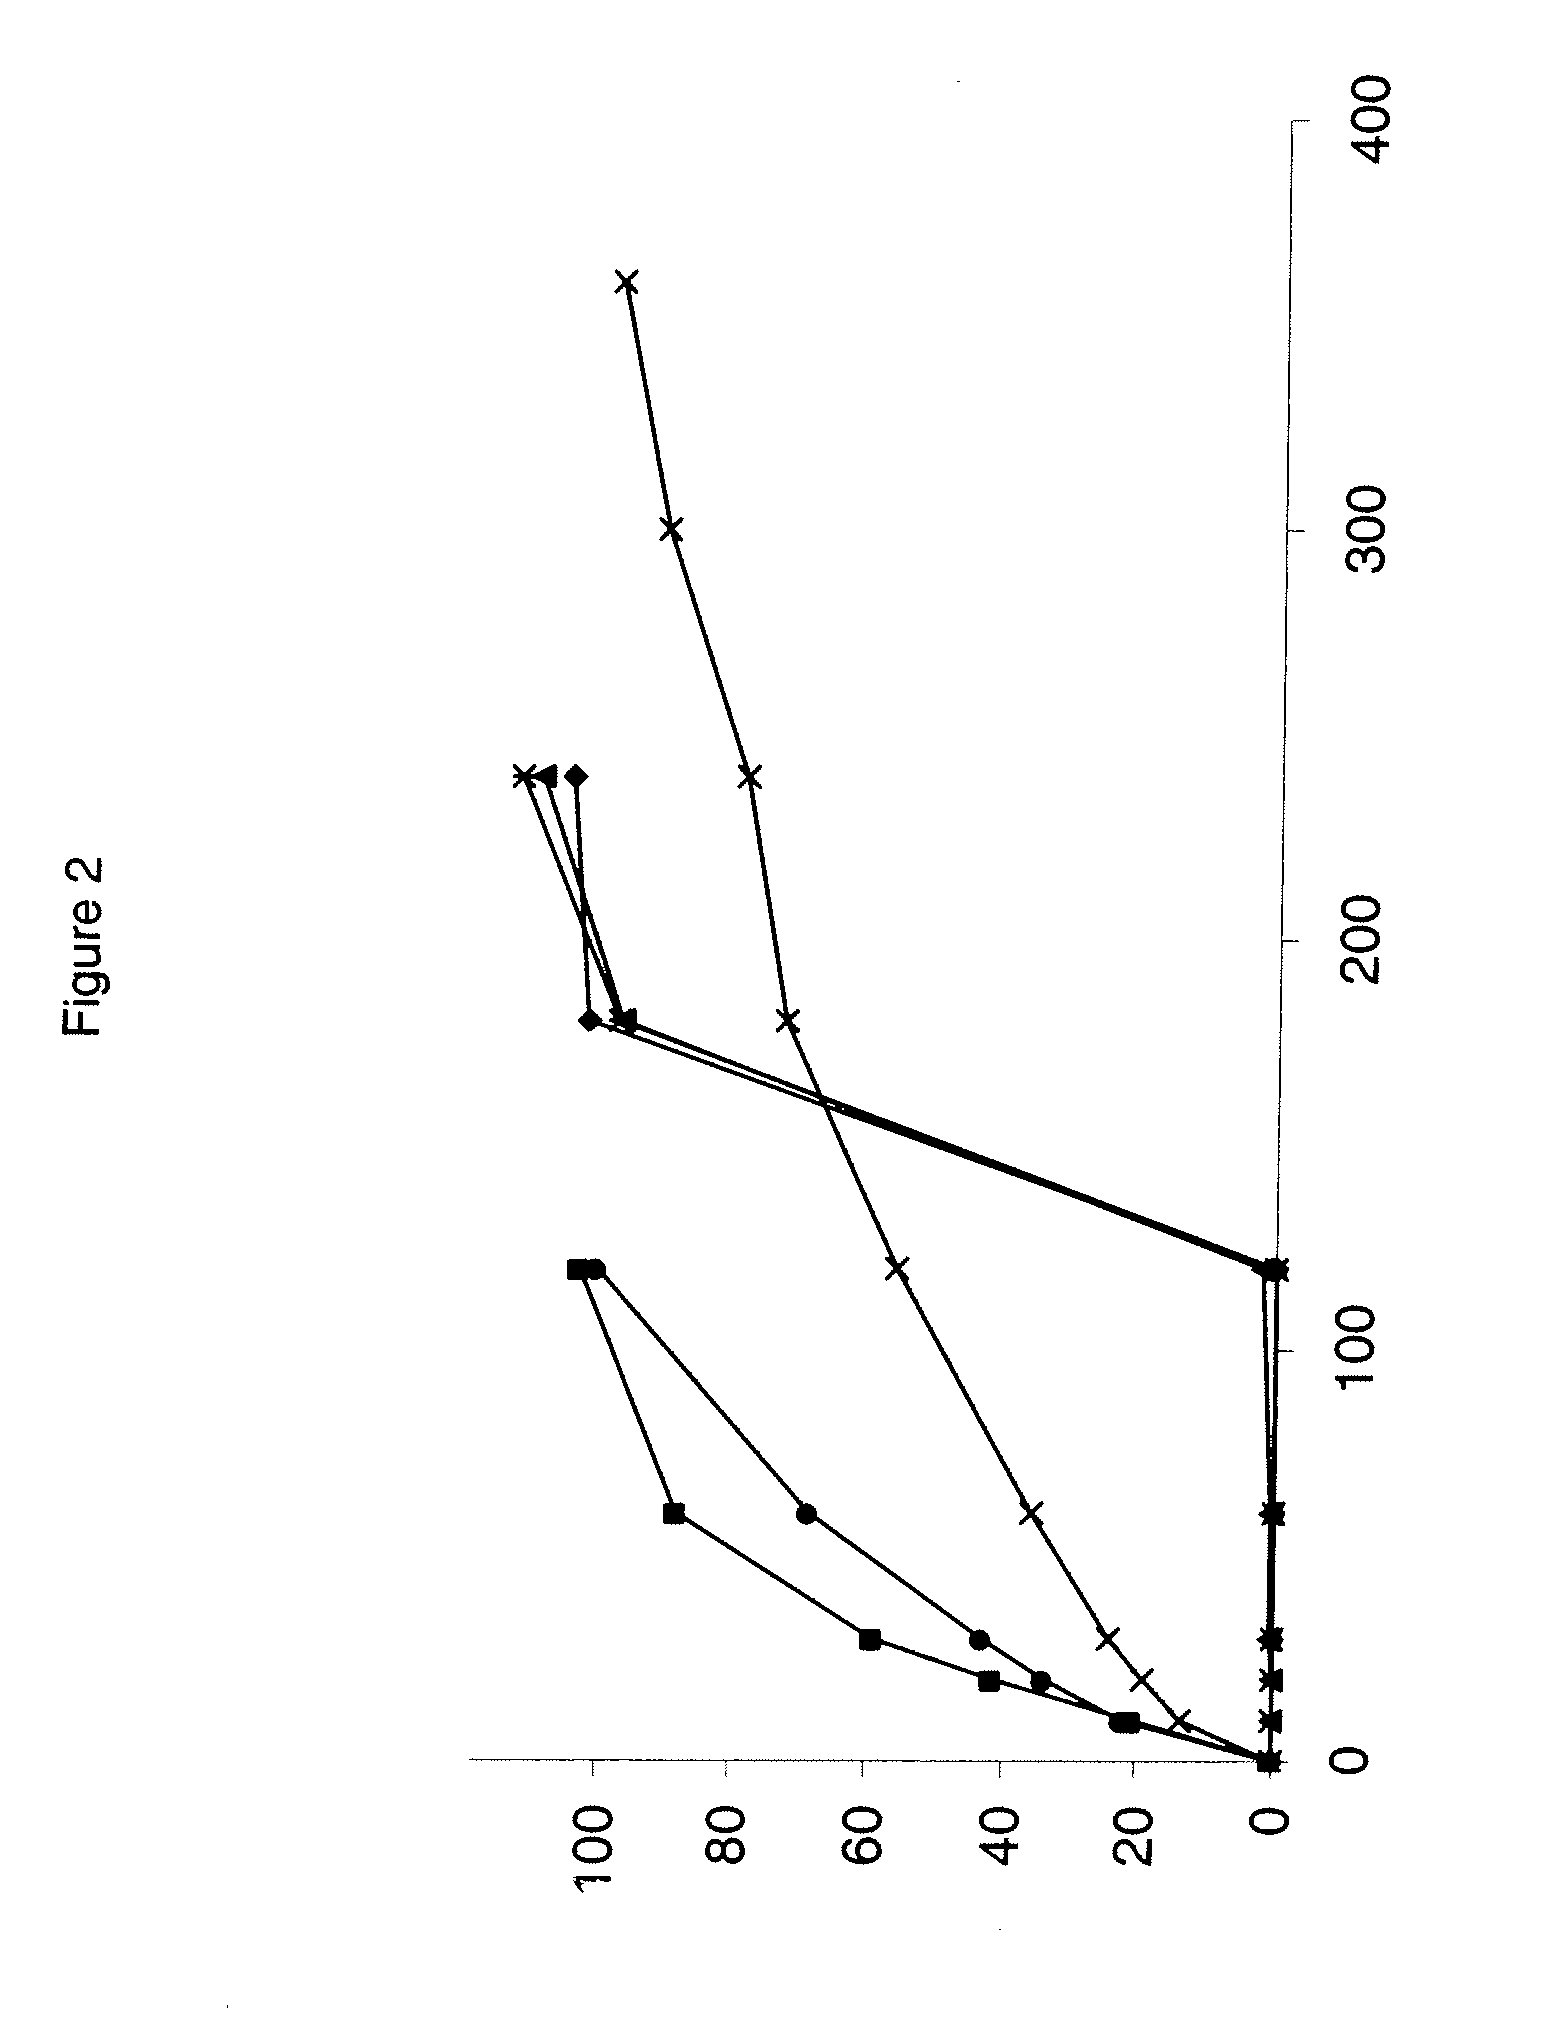 Modified release niacin formulations